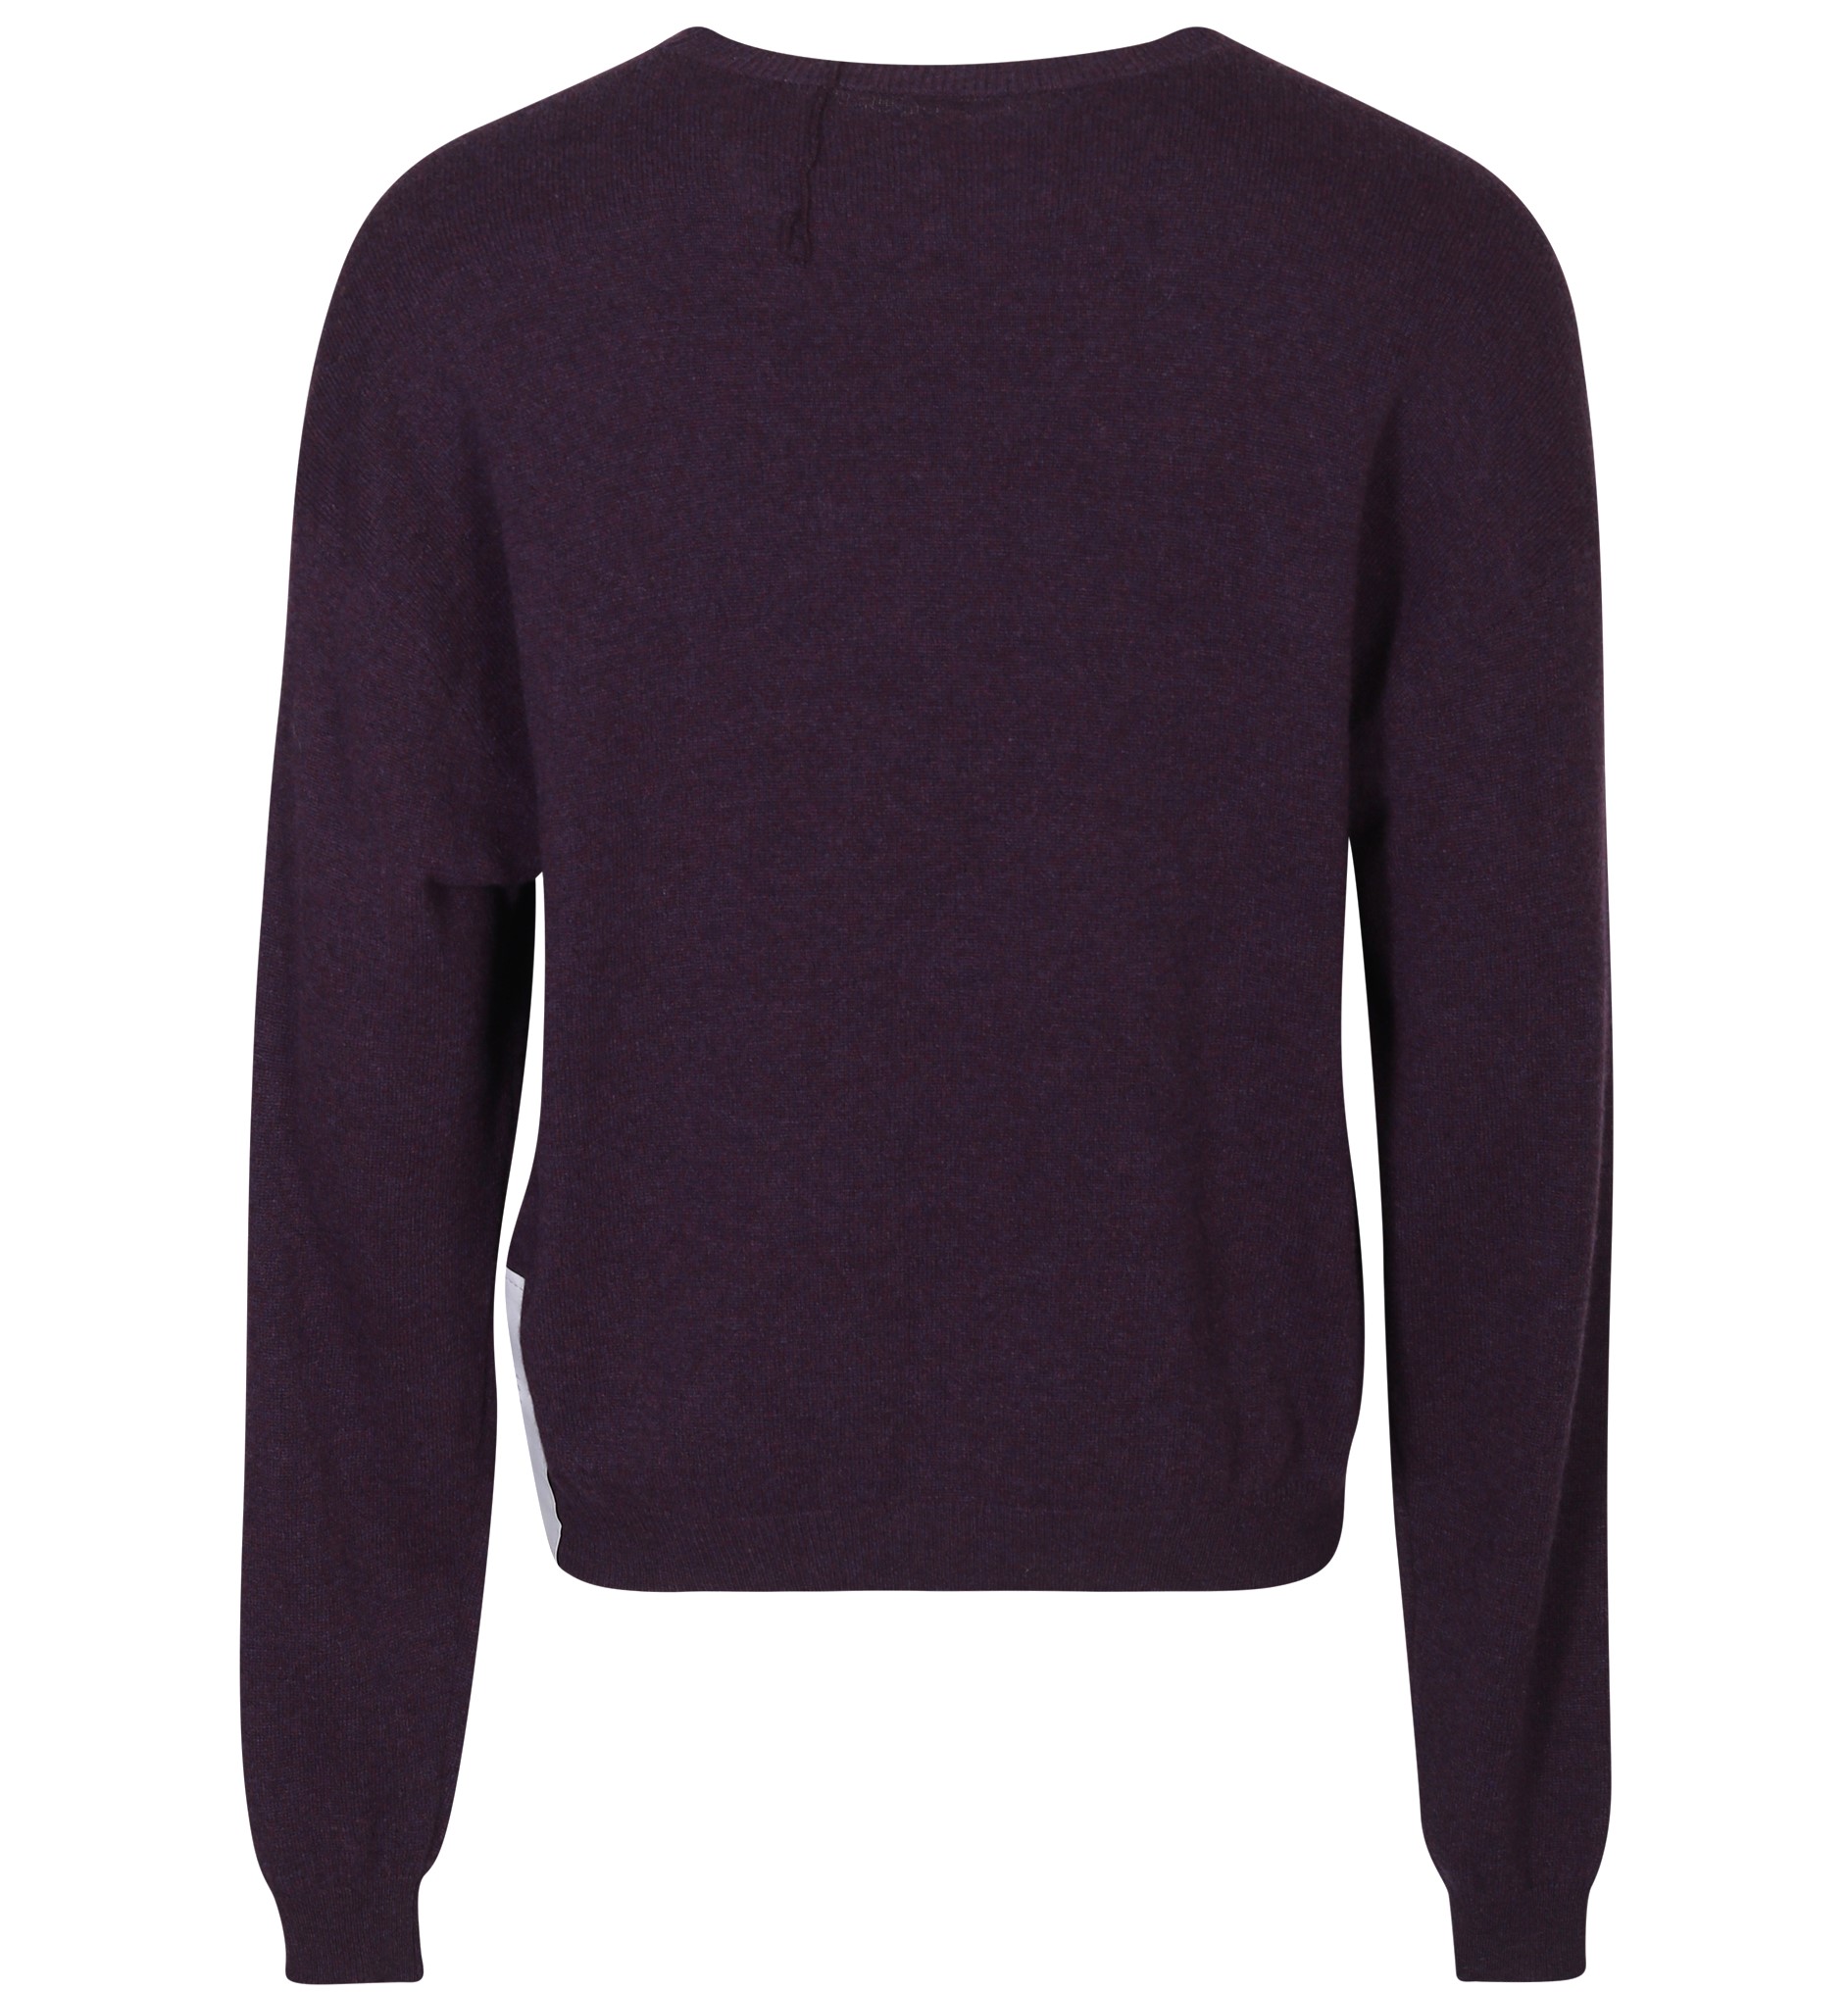 RAMAEL Infinity Cashmere Sweater in Aubergine S